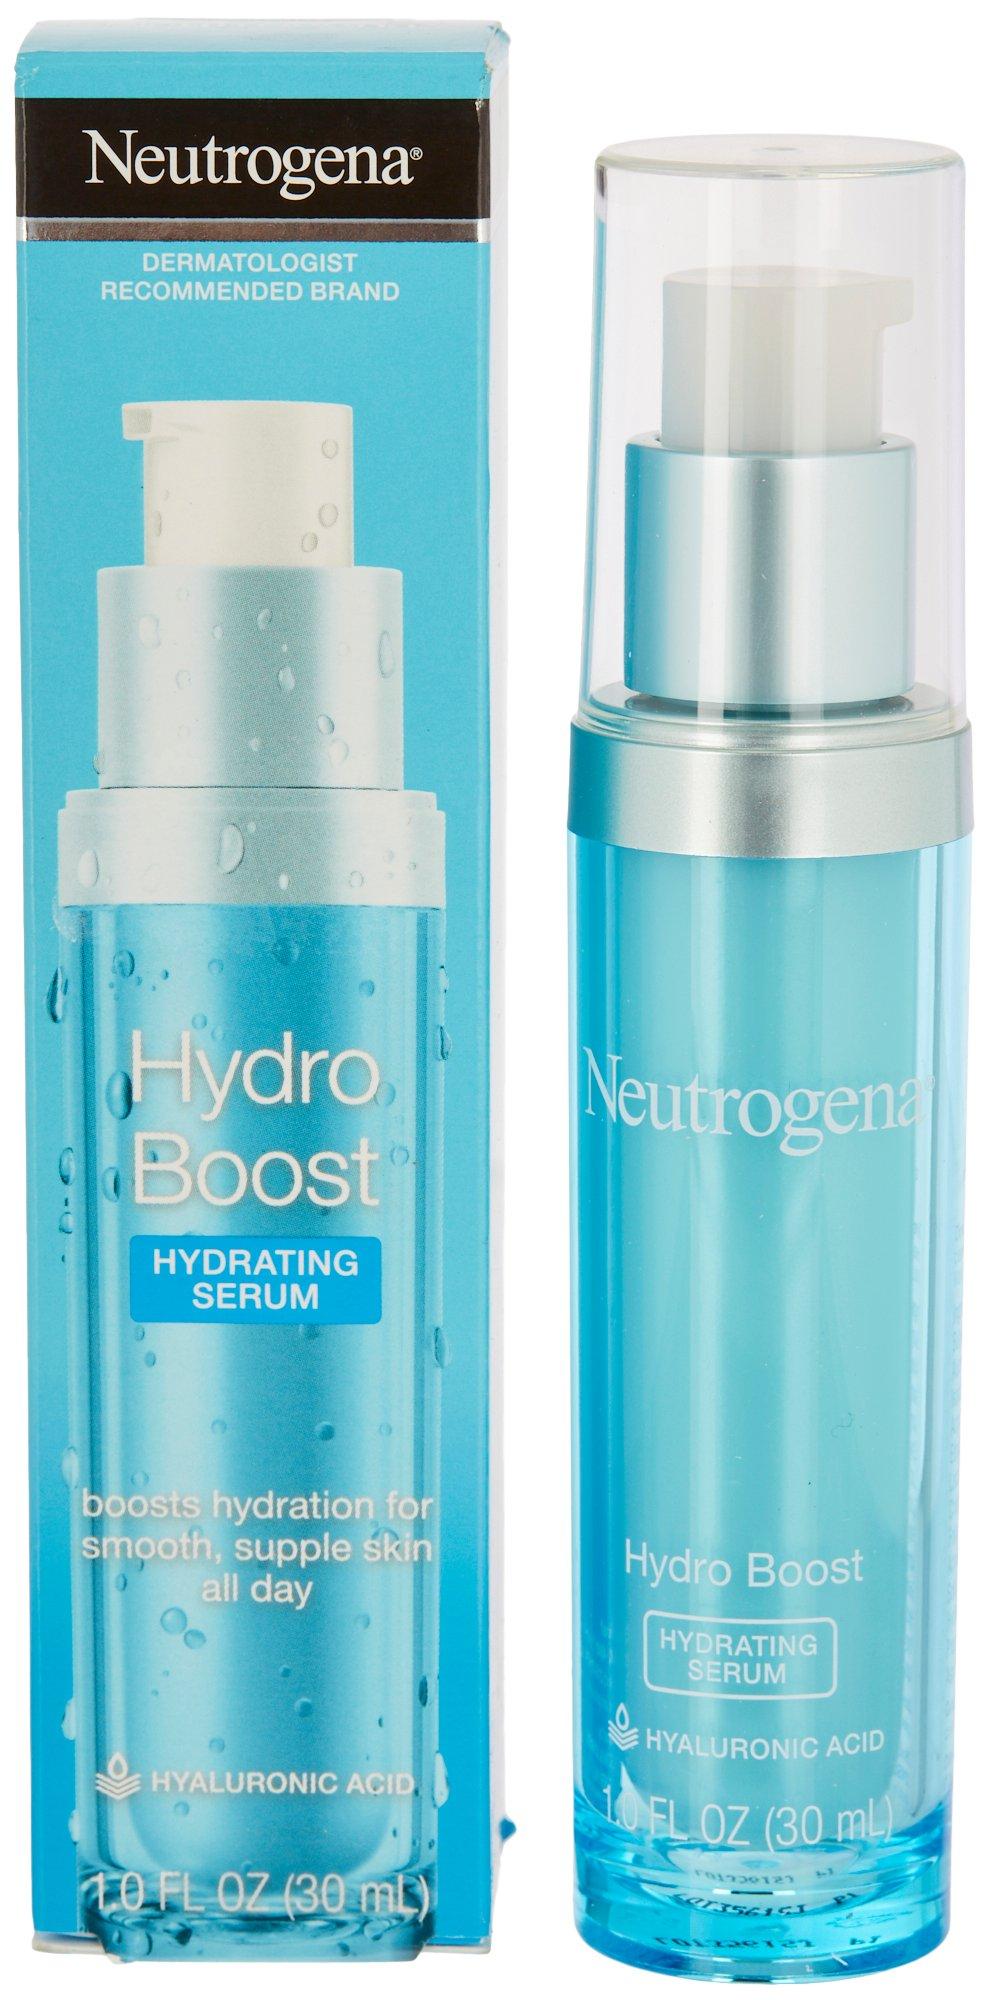 Neutrogena 1 Fl.Oz. Hydro Boost Hydrating Serum